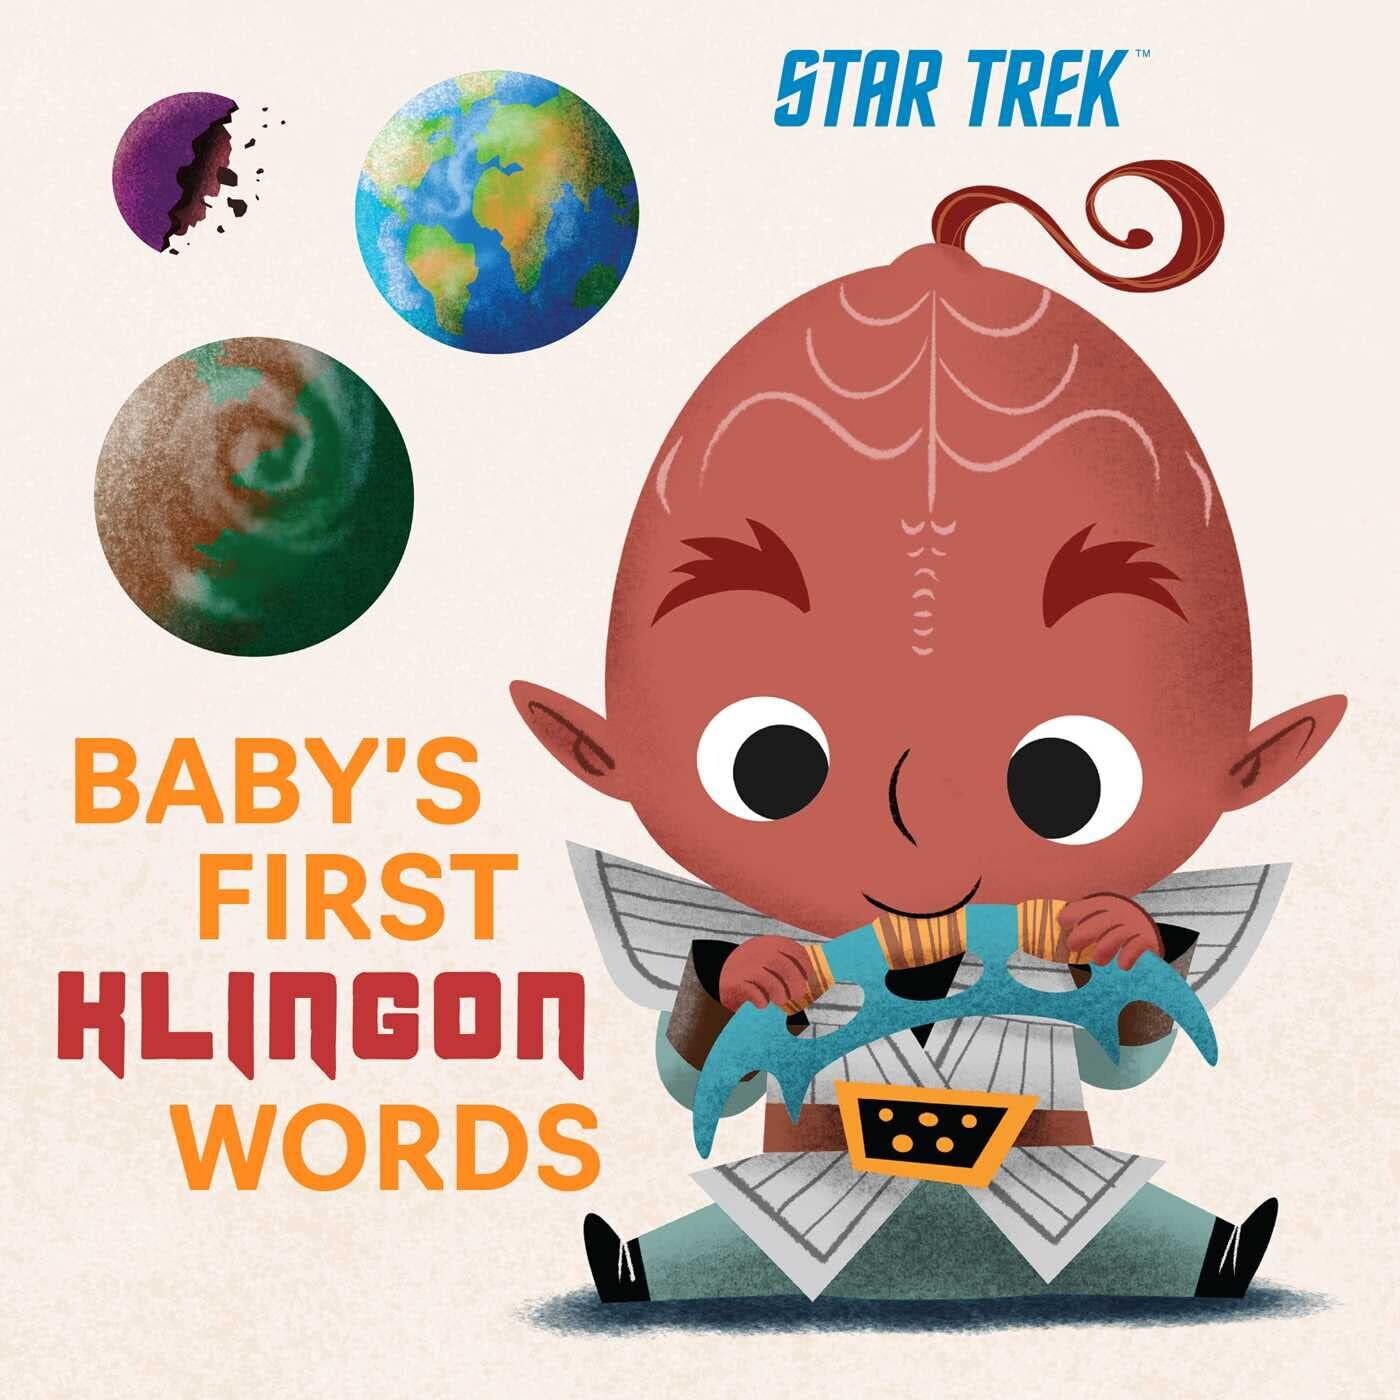 Star Trek Baby's First Klingon Words